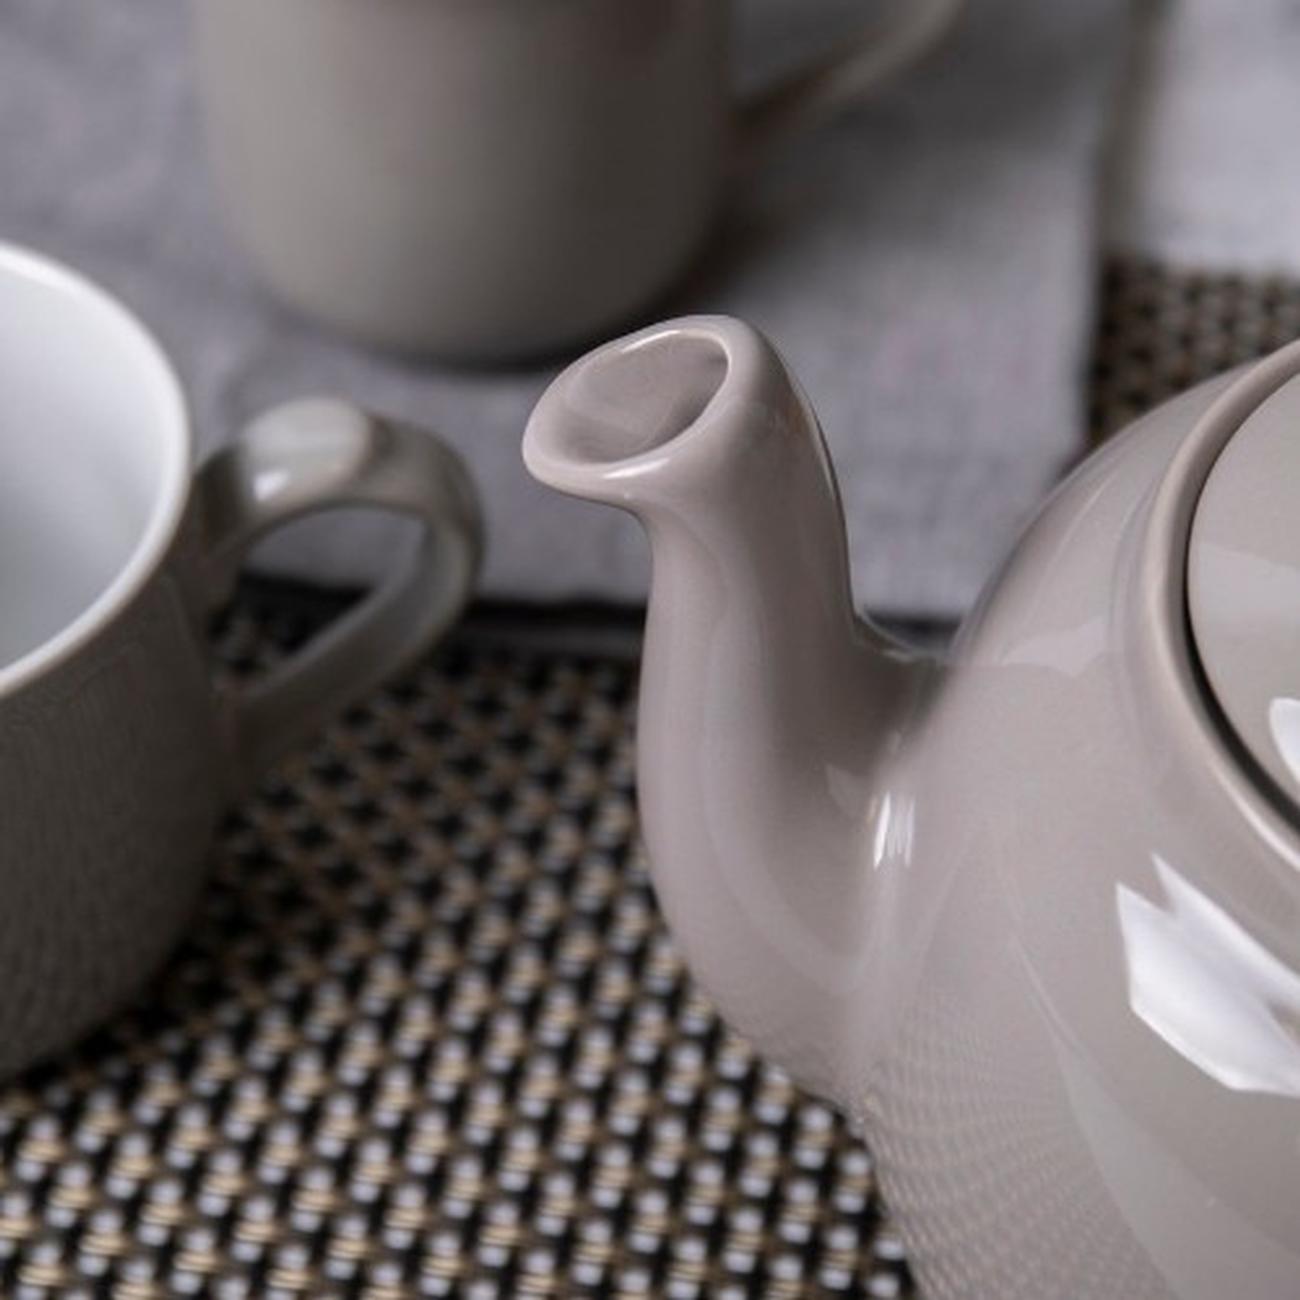 London Pottery Farmhouse Teapot 4 Cup Grey